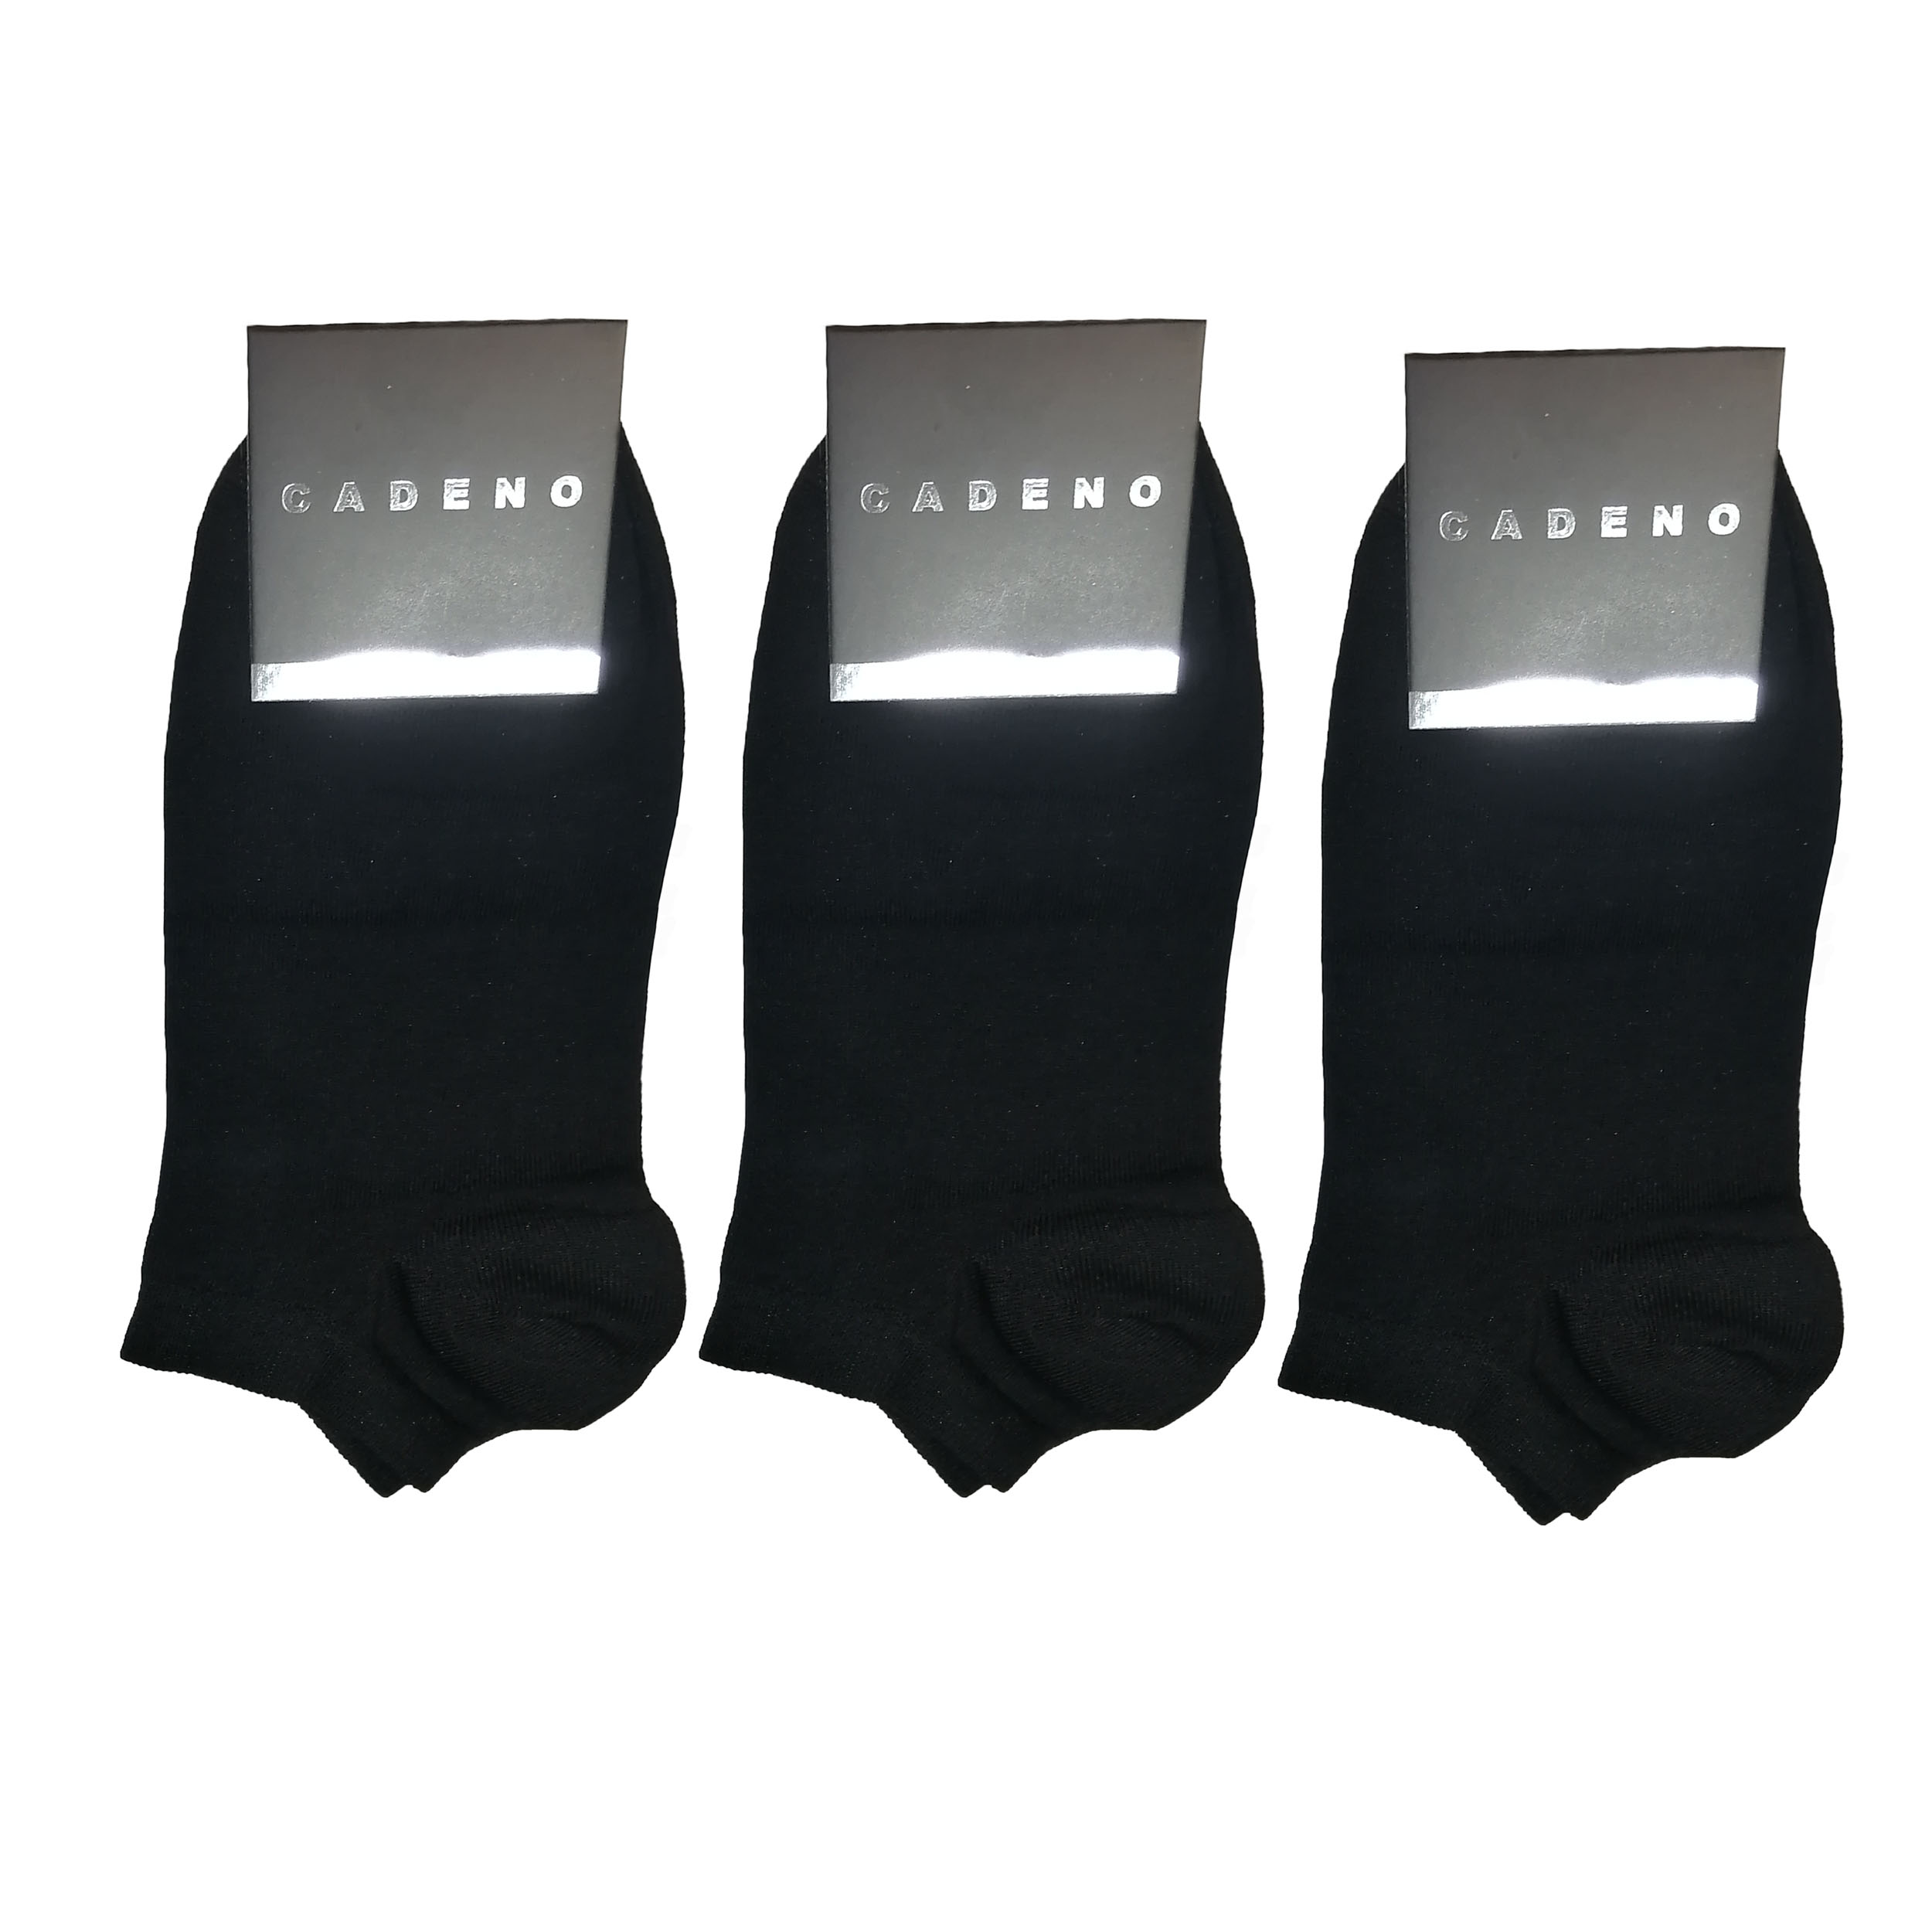 جوراب مردانه کادنو مدل CAM03 بسته 3 عددی